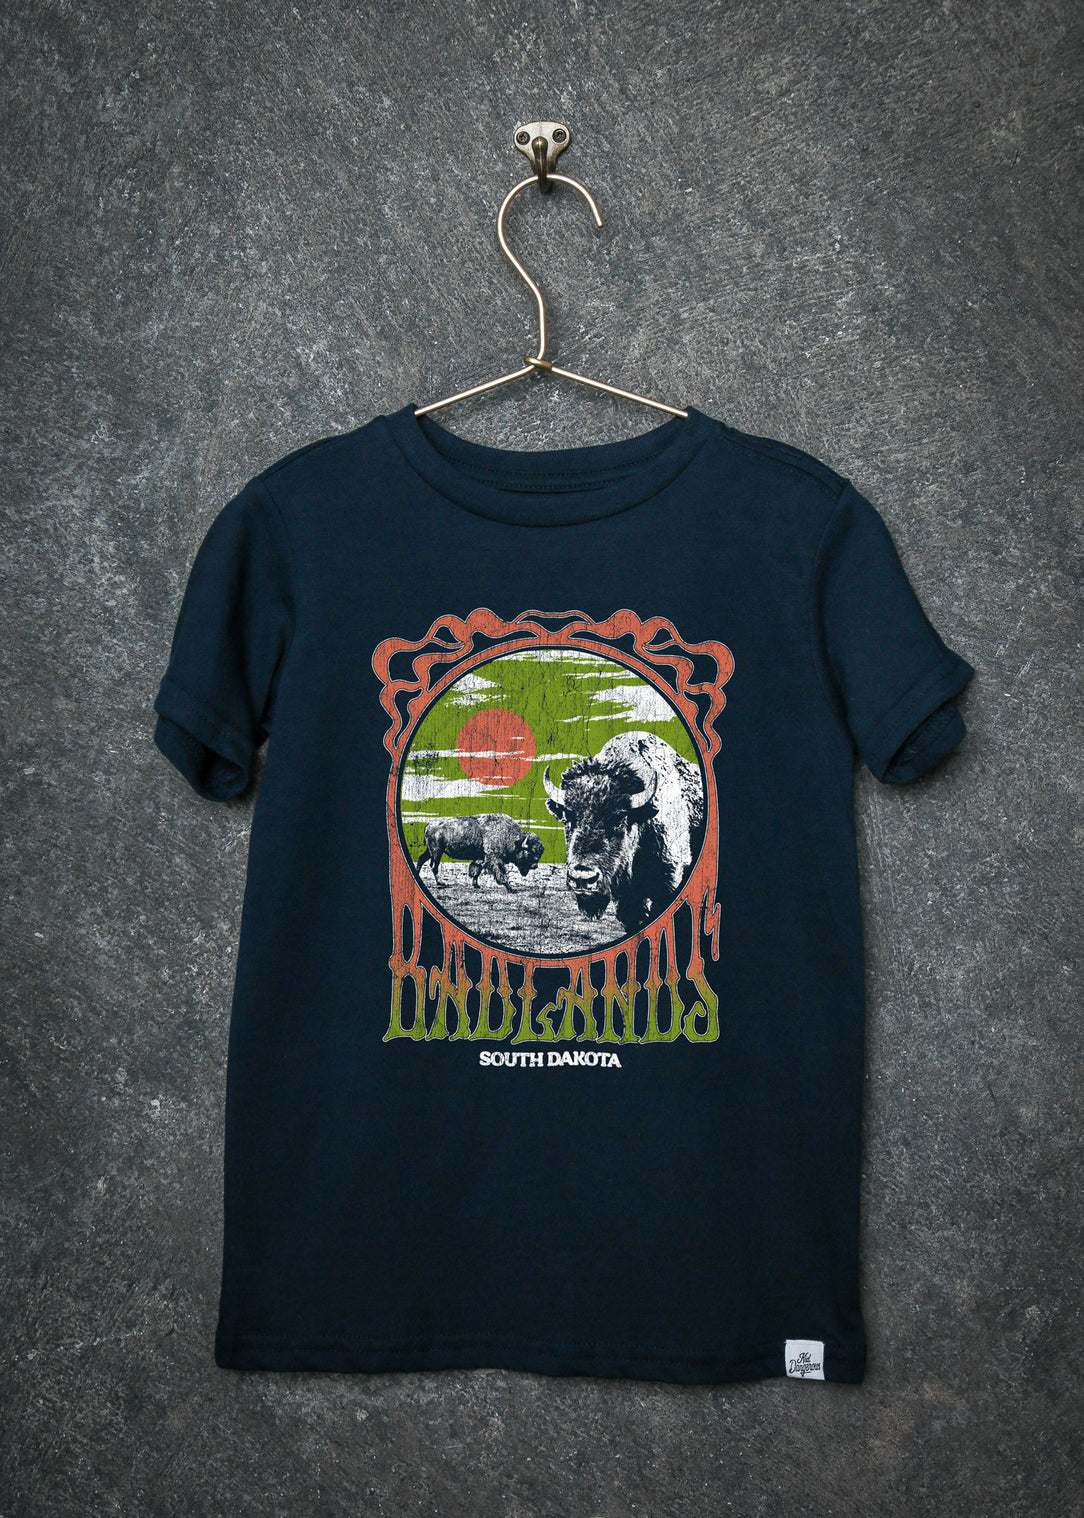 Buffalo Blue Jays Kids T-Shirt for Sale by DavidEarton